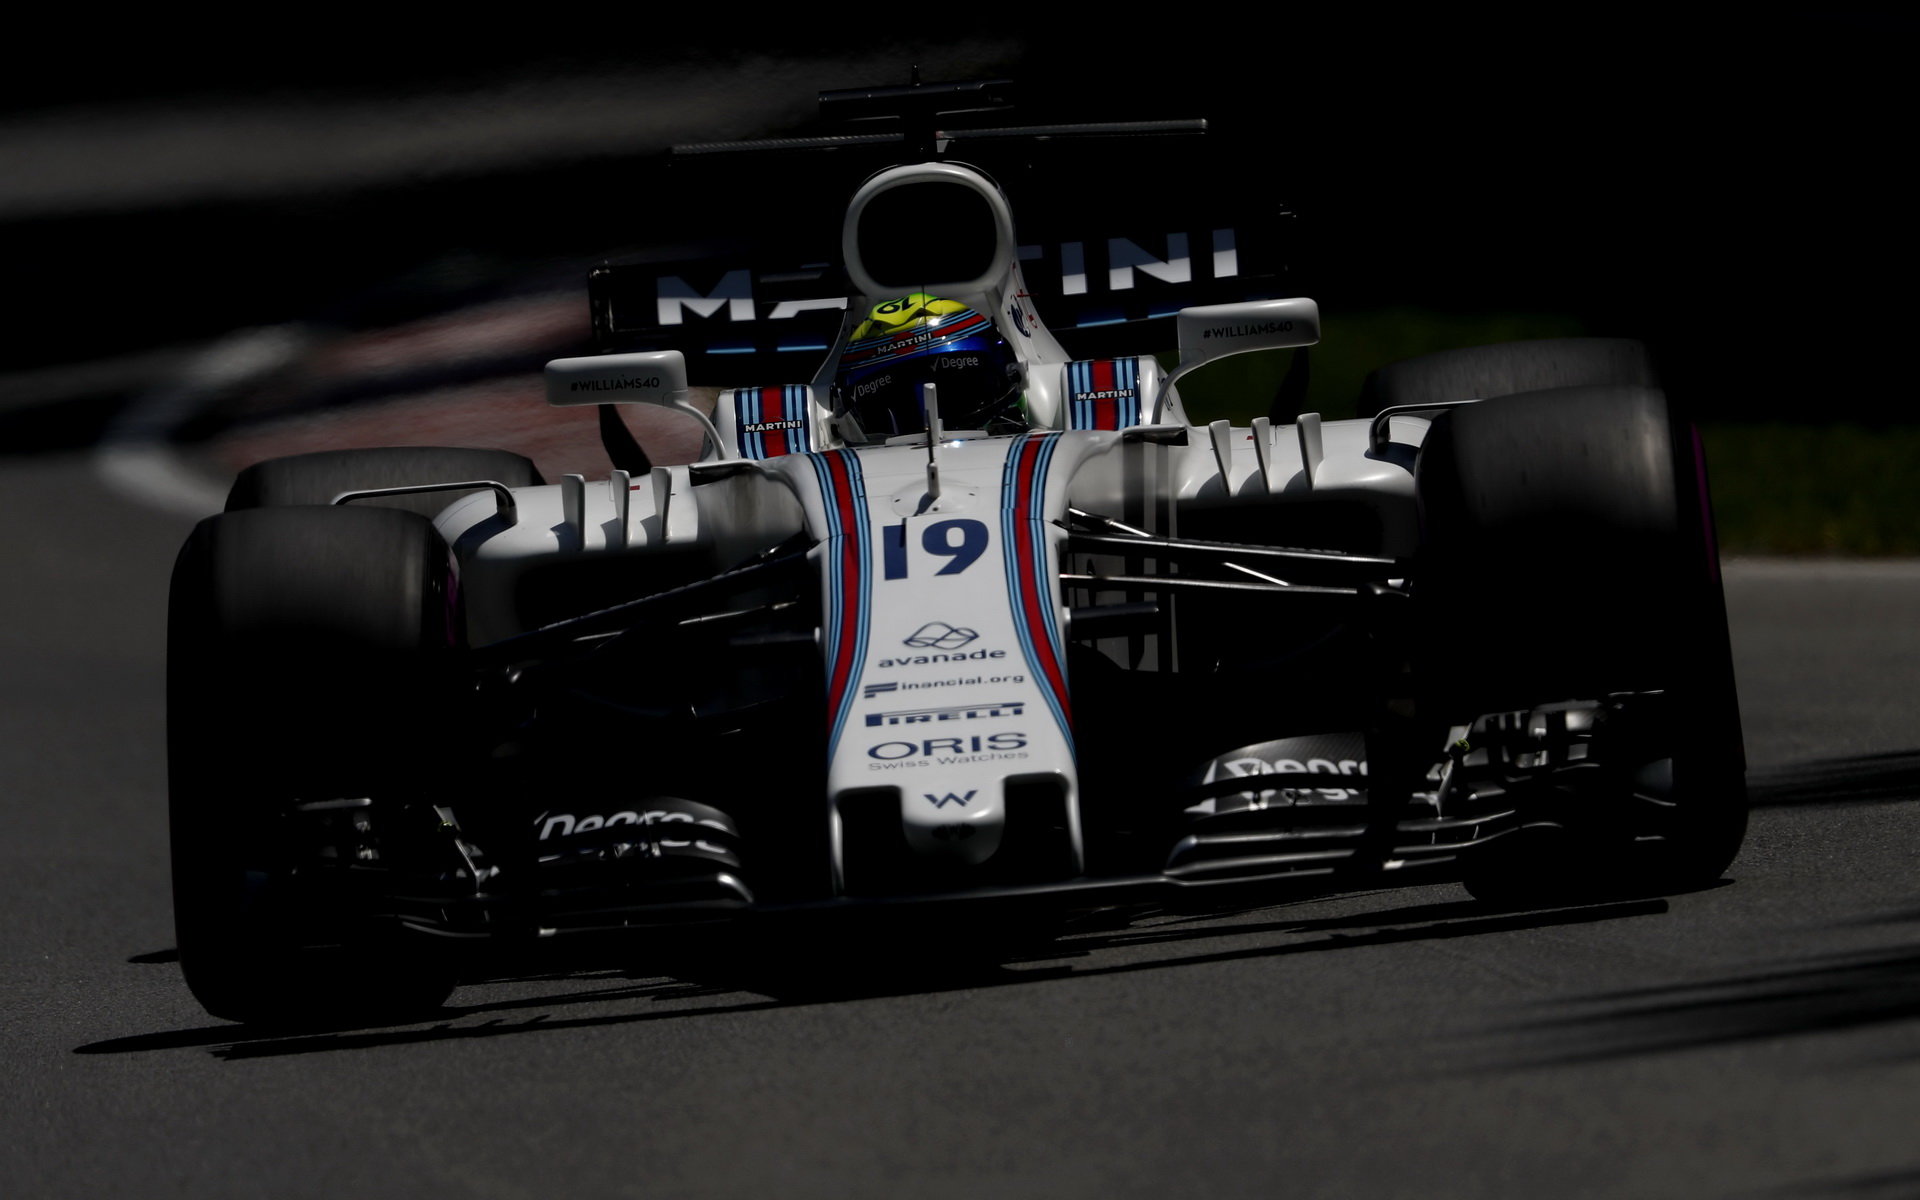 Felipe Massa v kvalifikaci v Kanadě